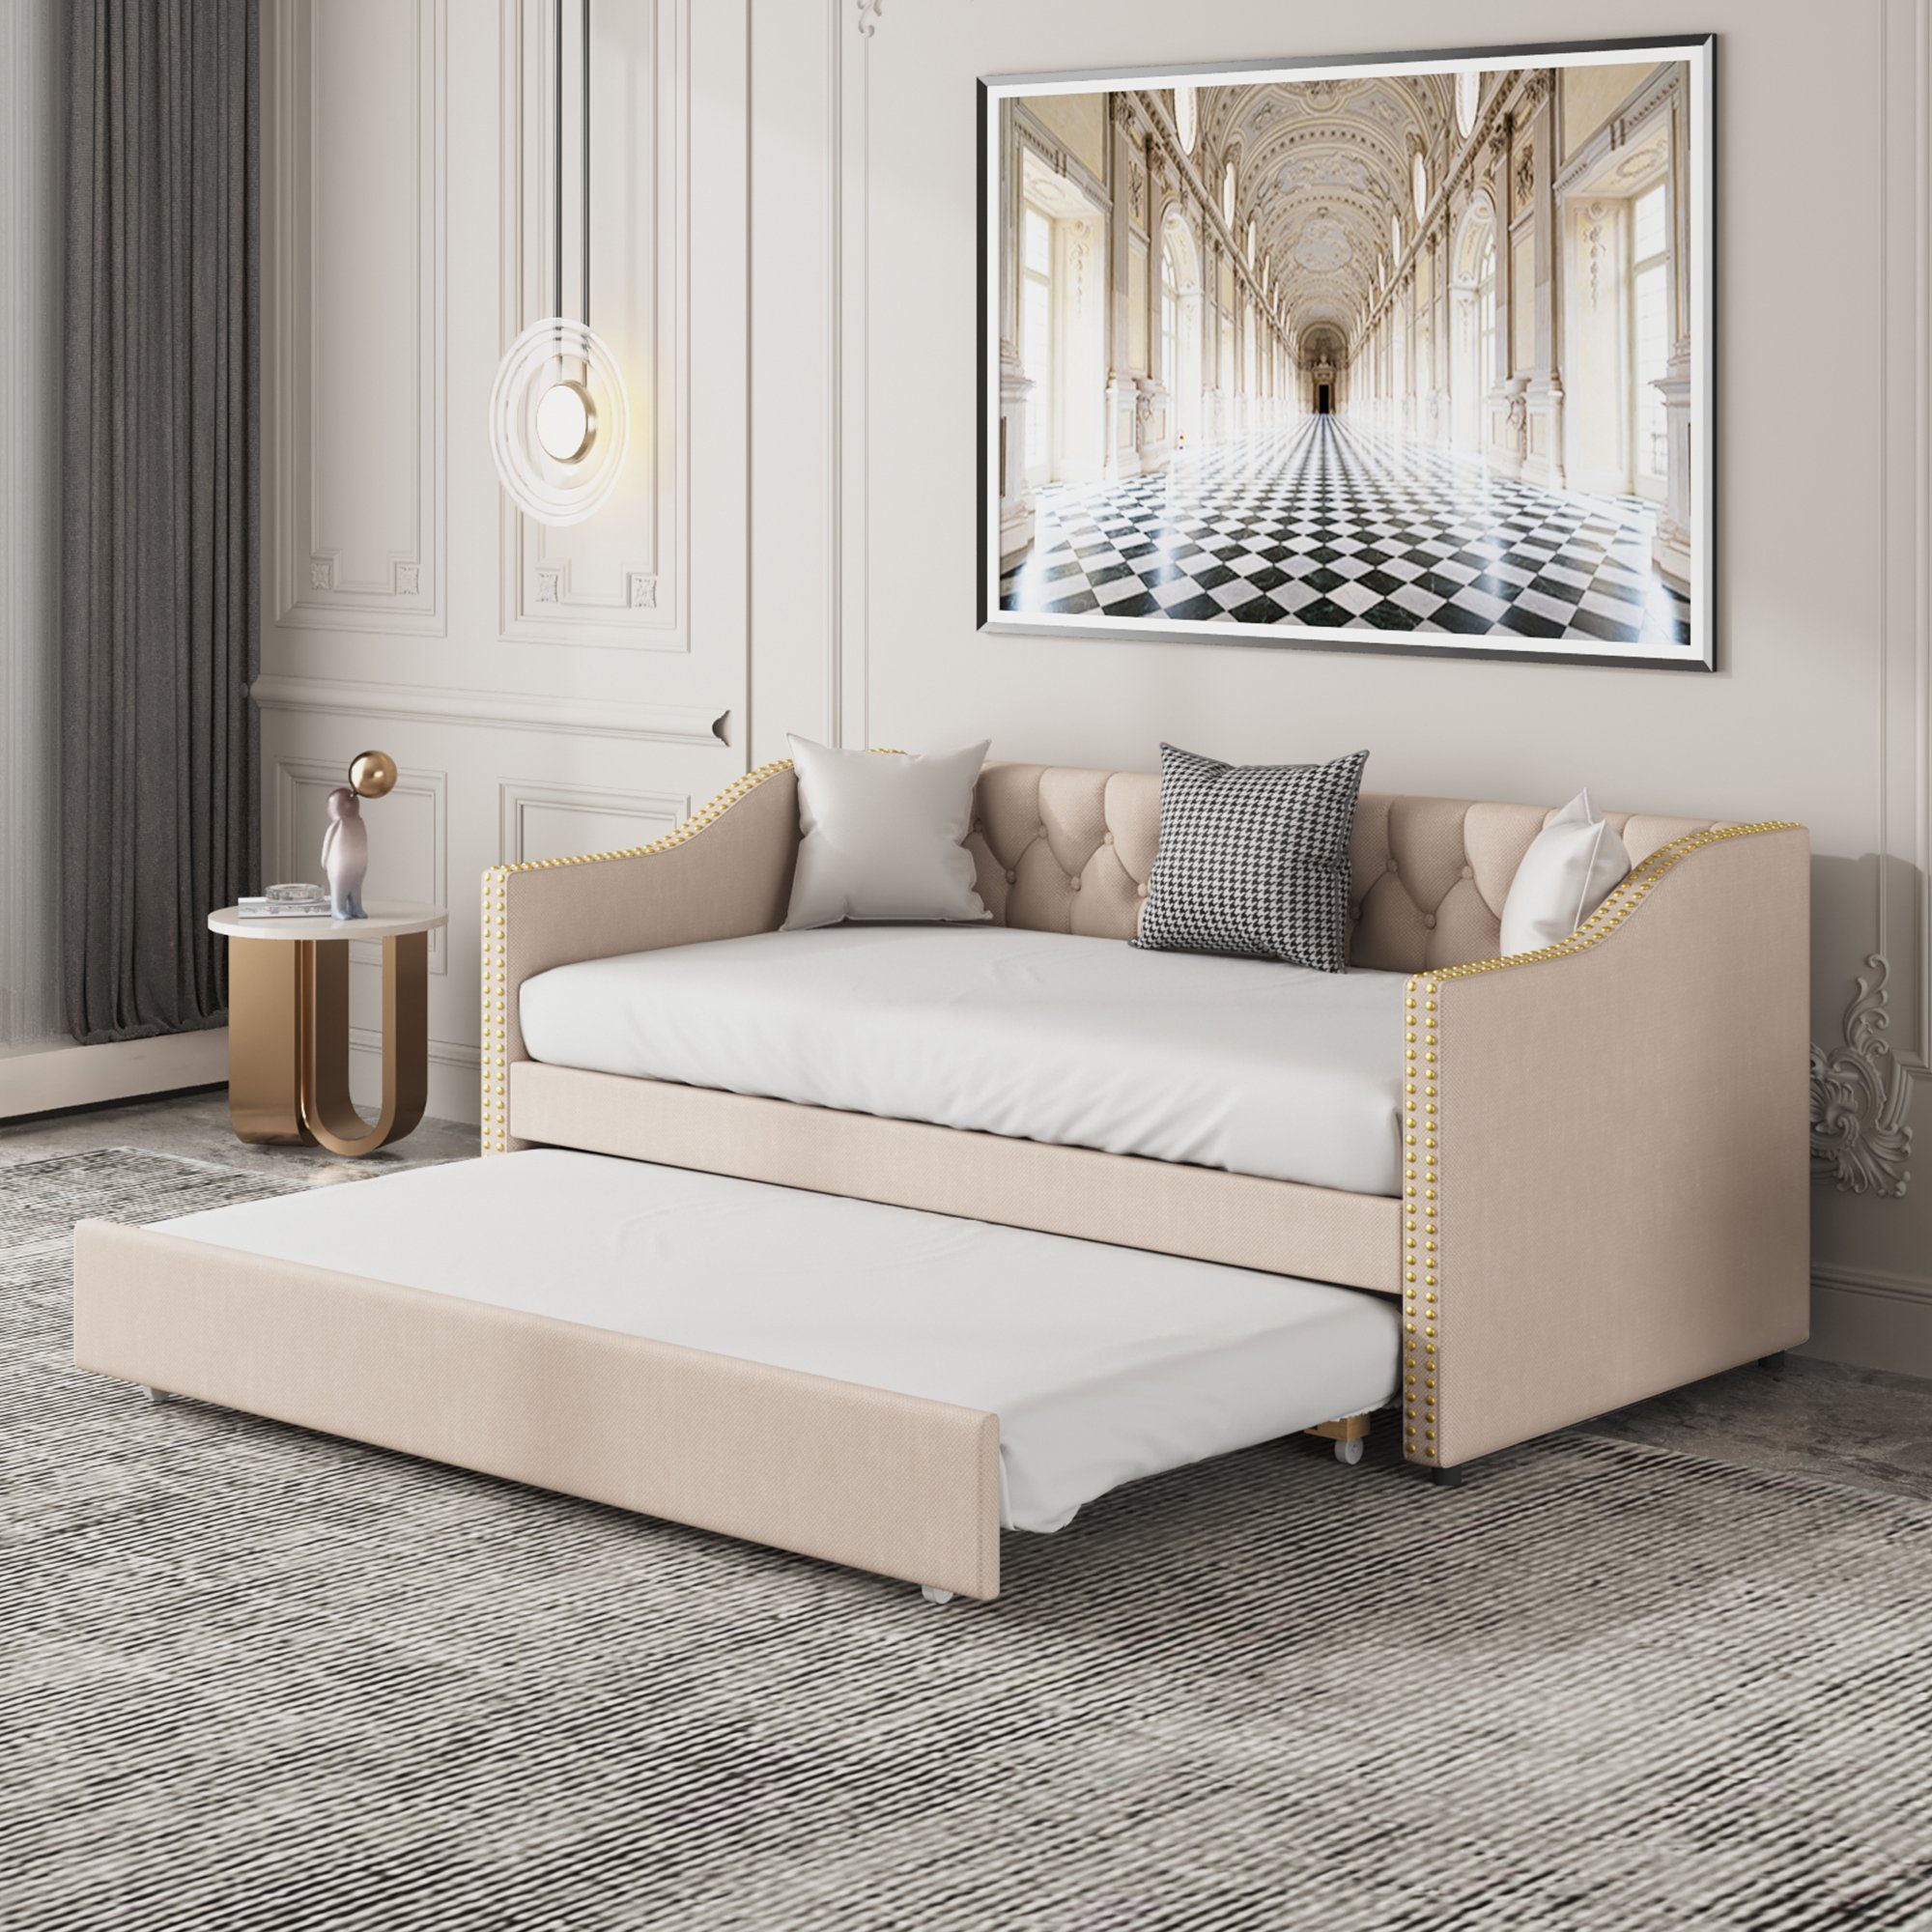 SOFTWEARY Schlafsofa Einzelsofa mit 90x200 Leinen Holz, inkl. aus Lattenrost, Einzelbett, cm, biege Jugendbett Ausziehbett Bettfunktion